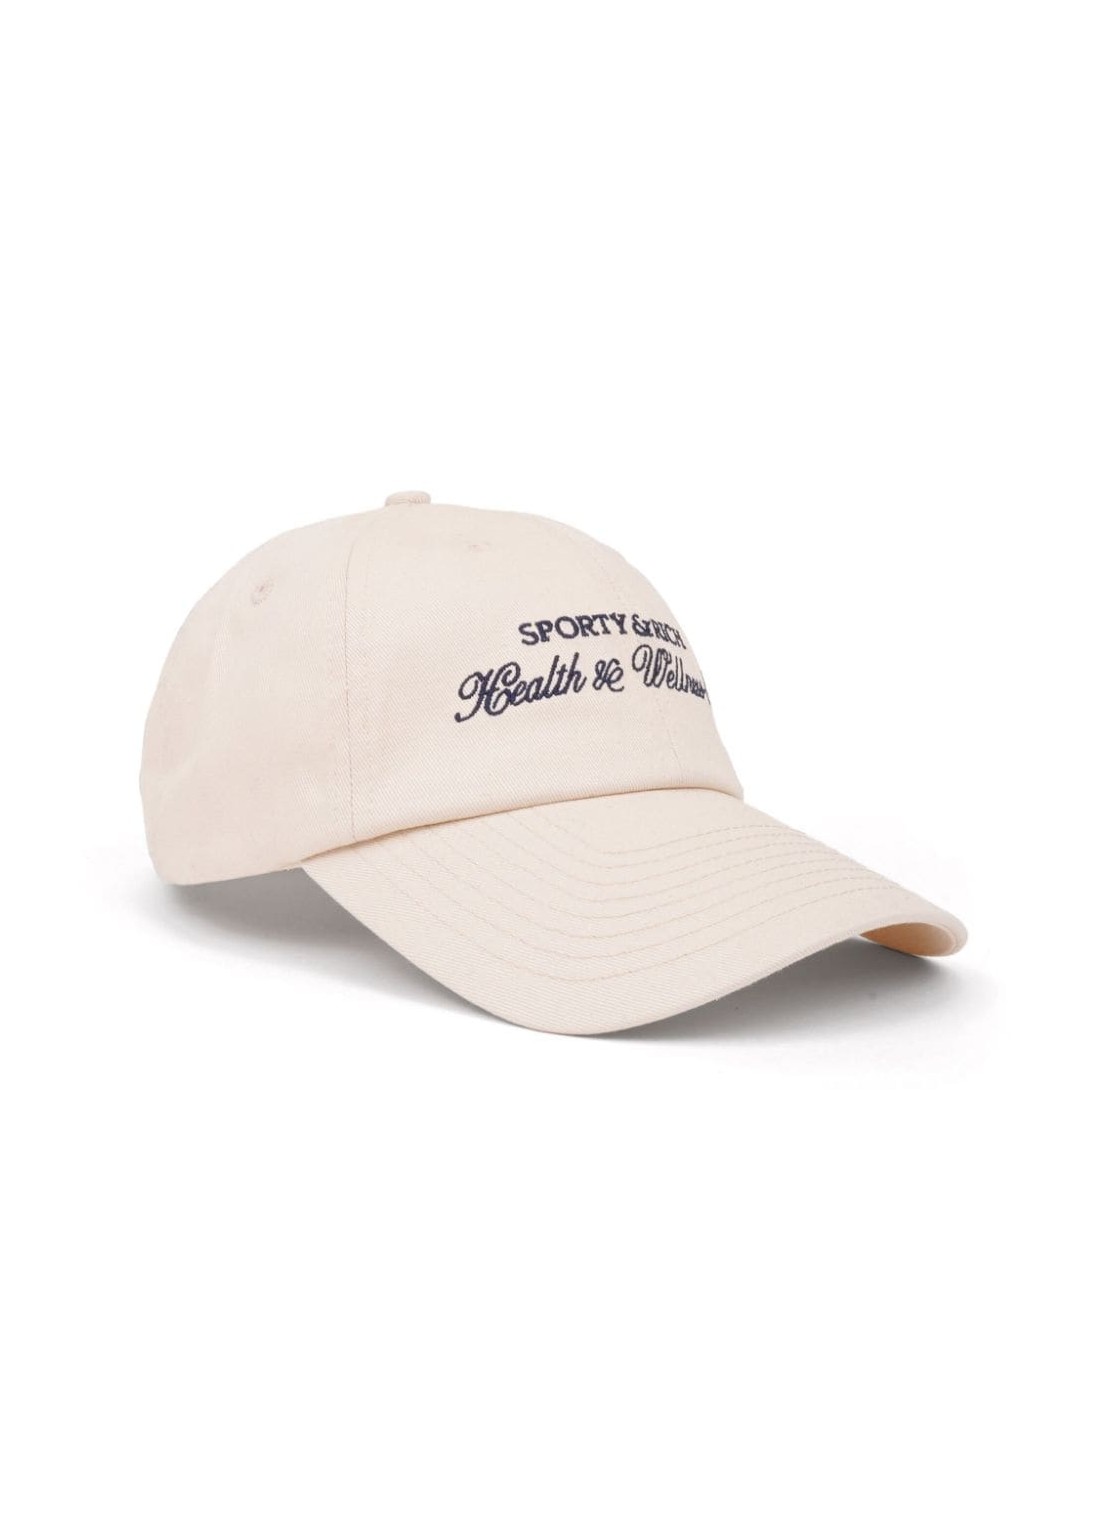 Gorras sporty & rich cap womanh&w club embroidered hat cream/navy - ac039s412hc cream talla T/U
 